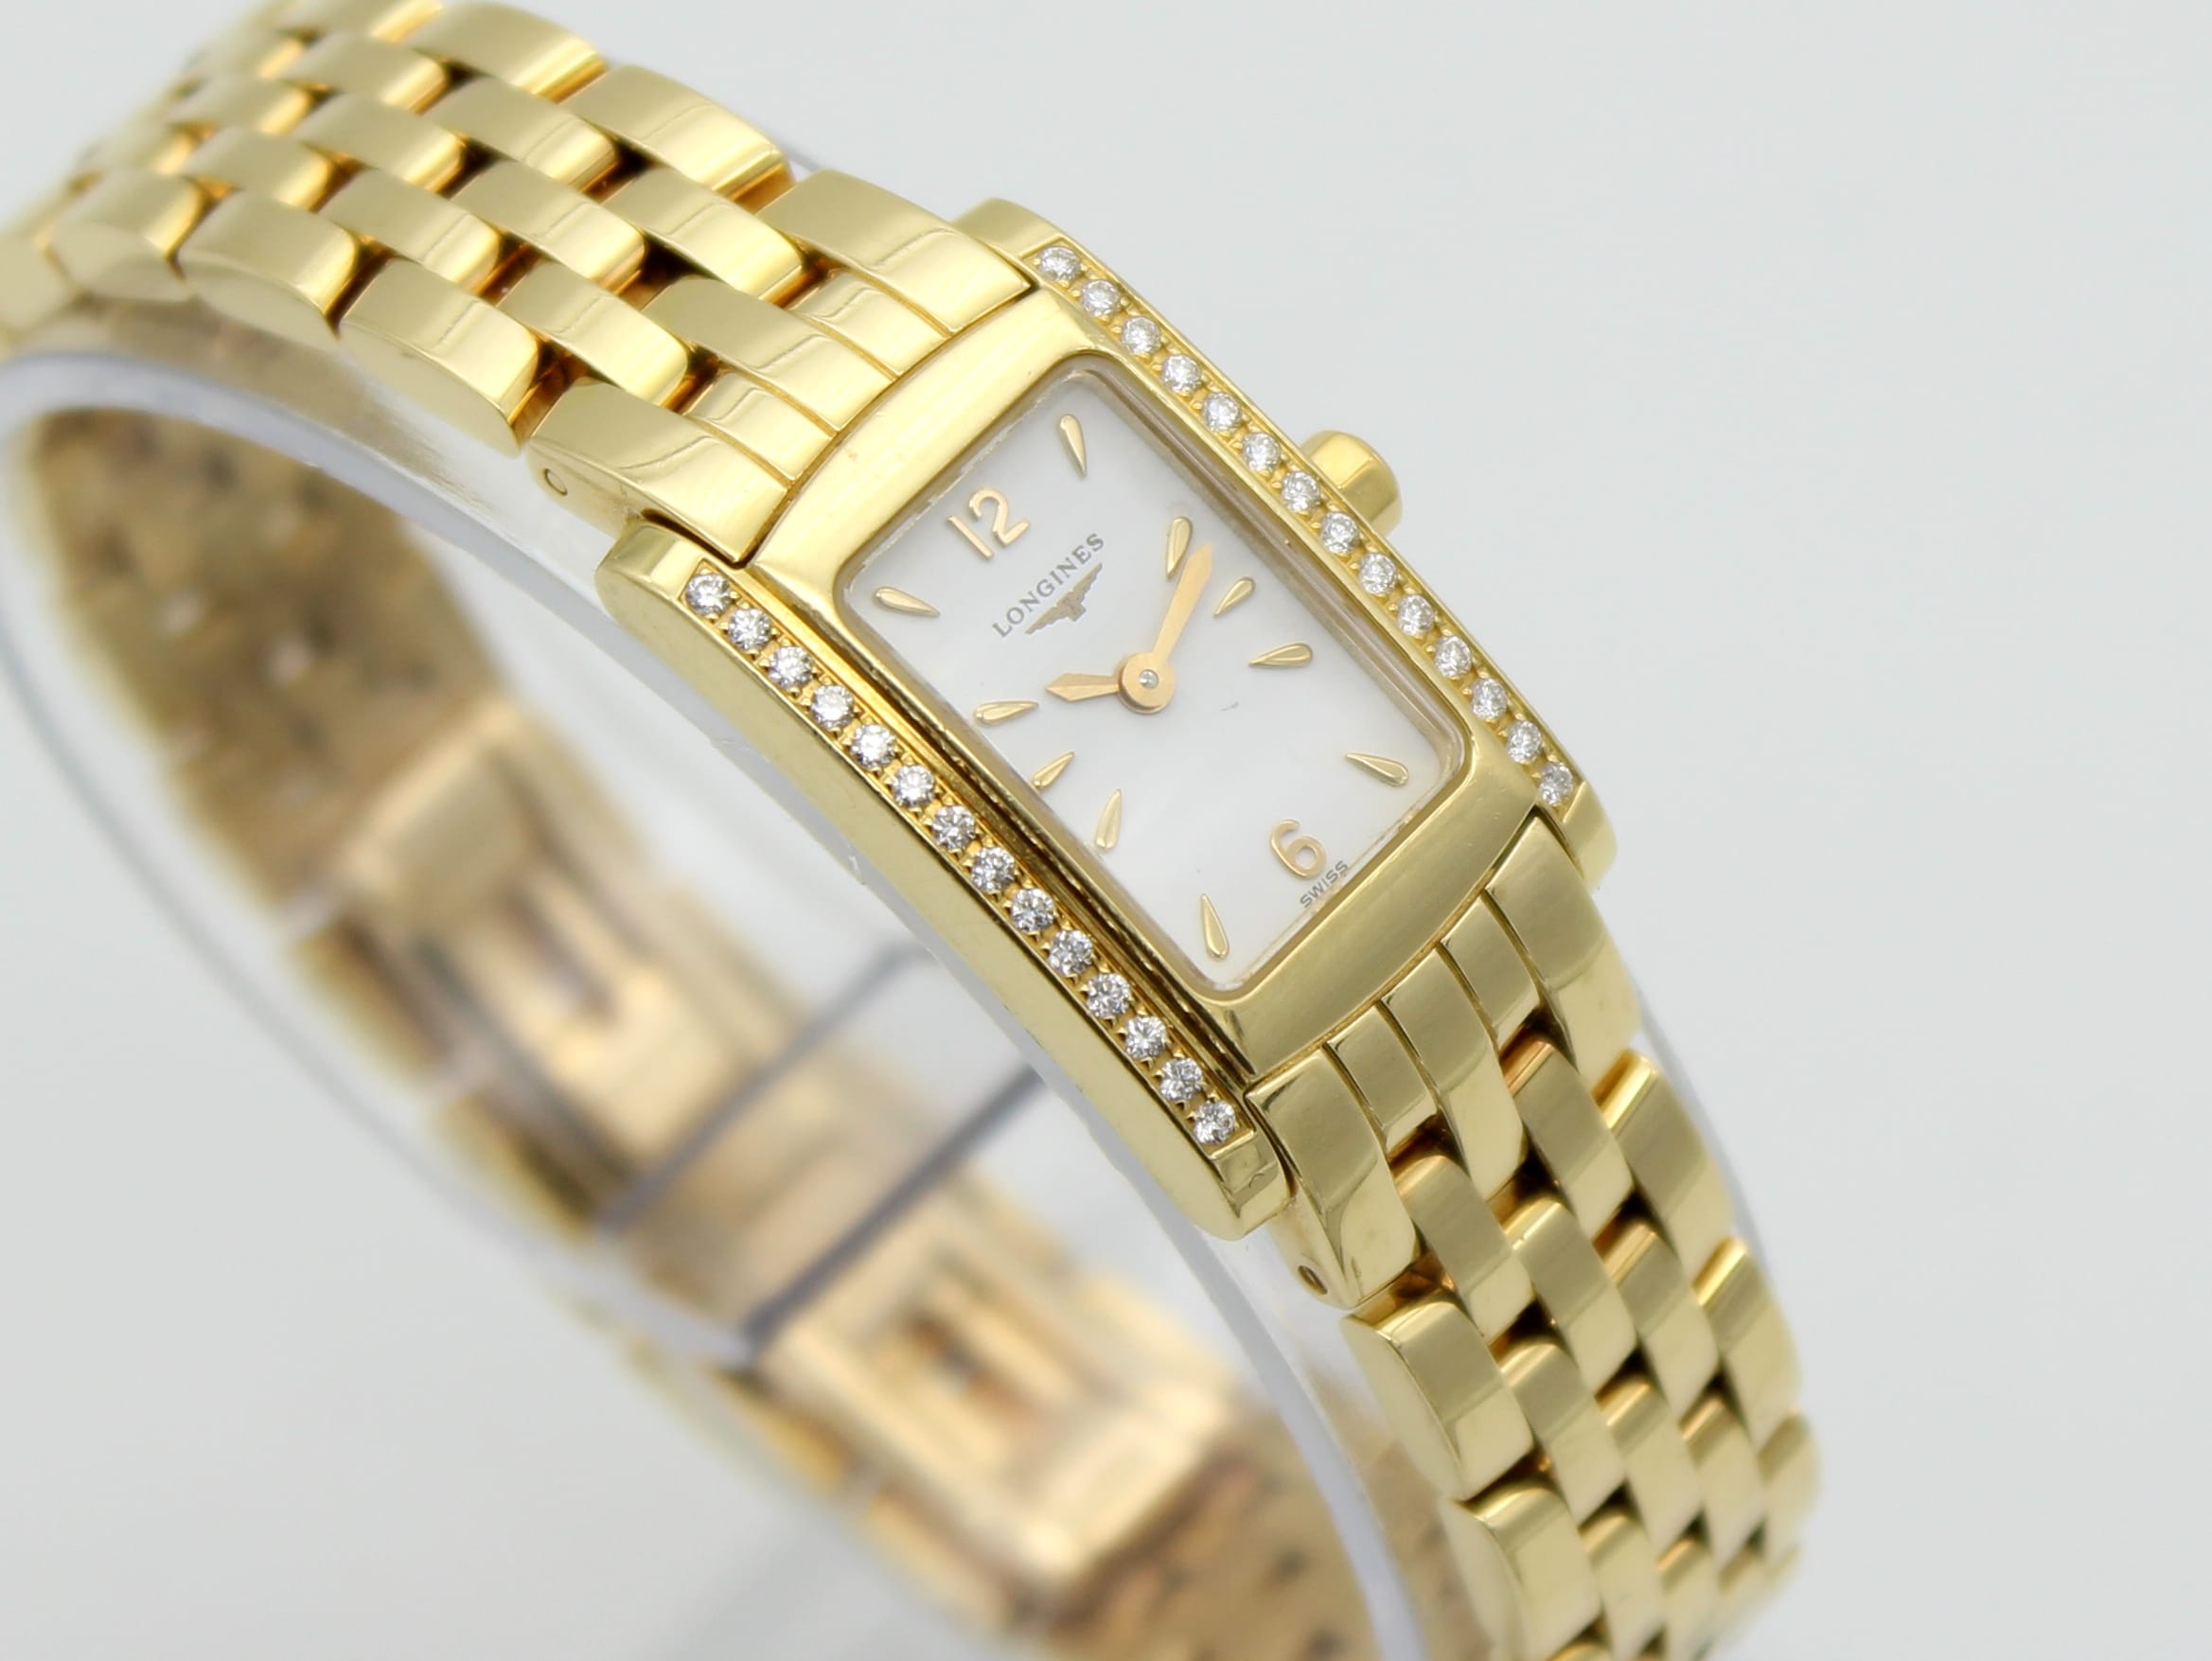 Longines Dolce Vita 18k Yellow Gold Diamond Bezel L51587 - Luxury ...